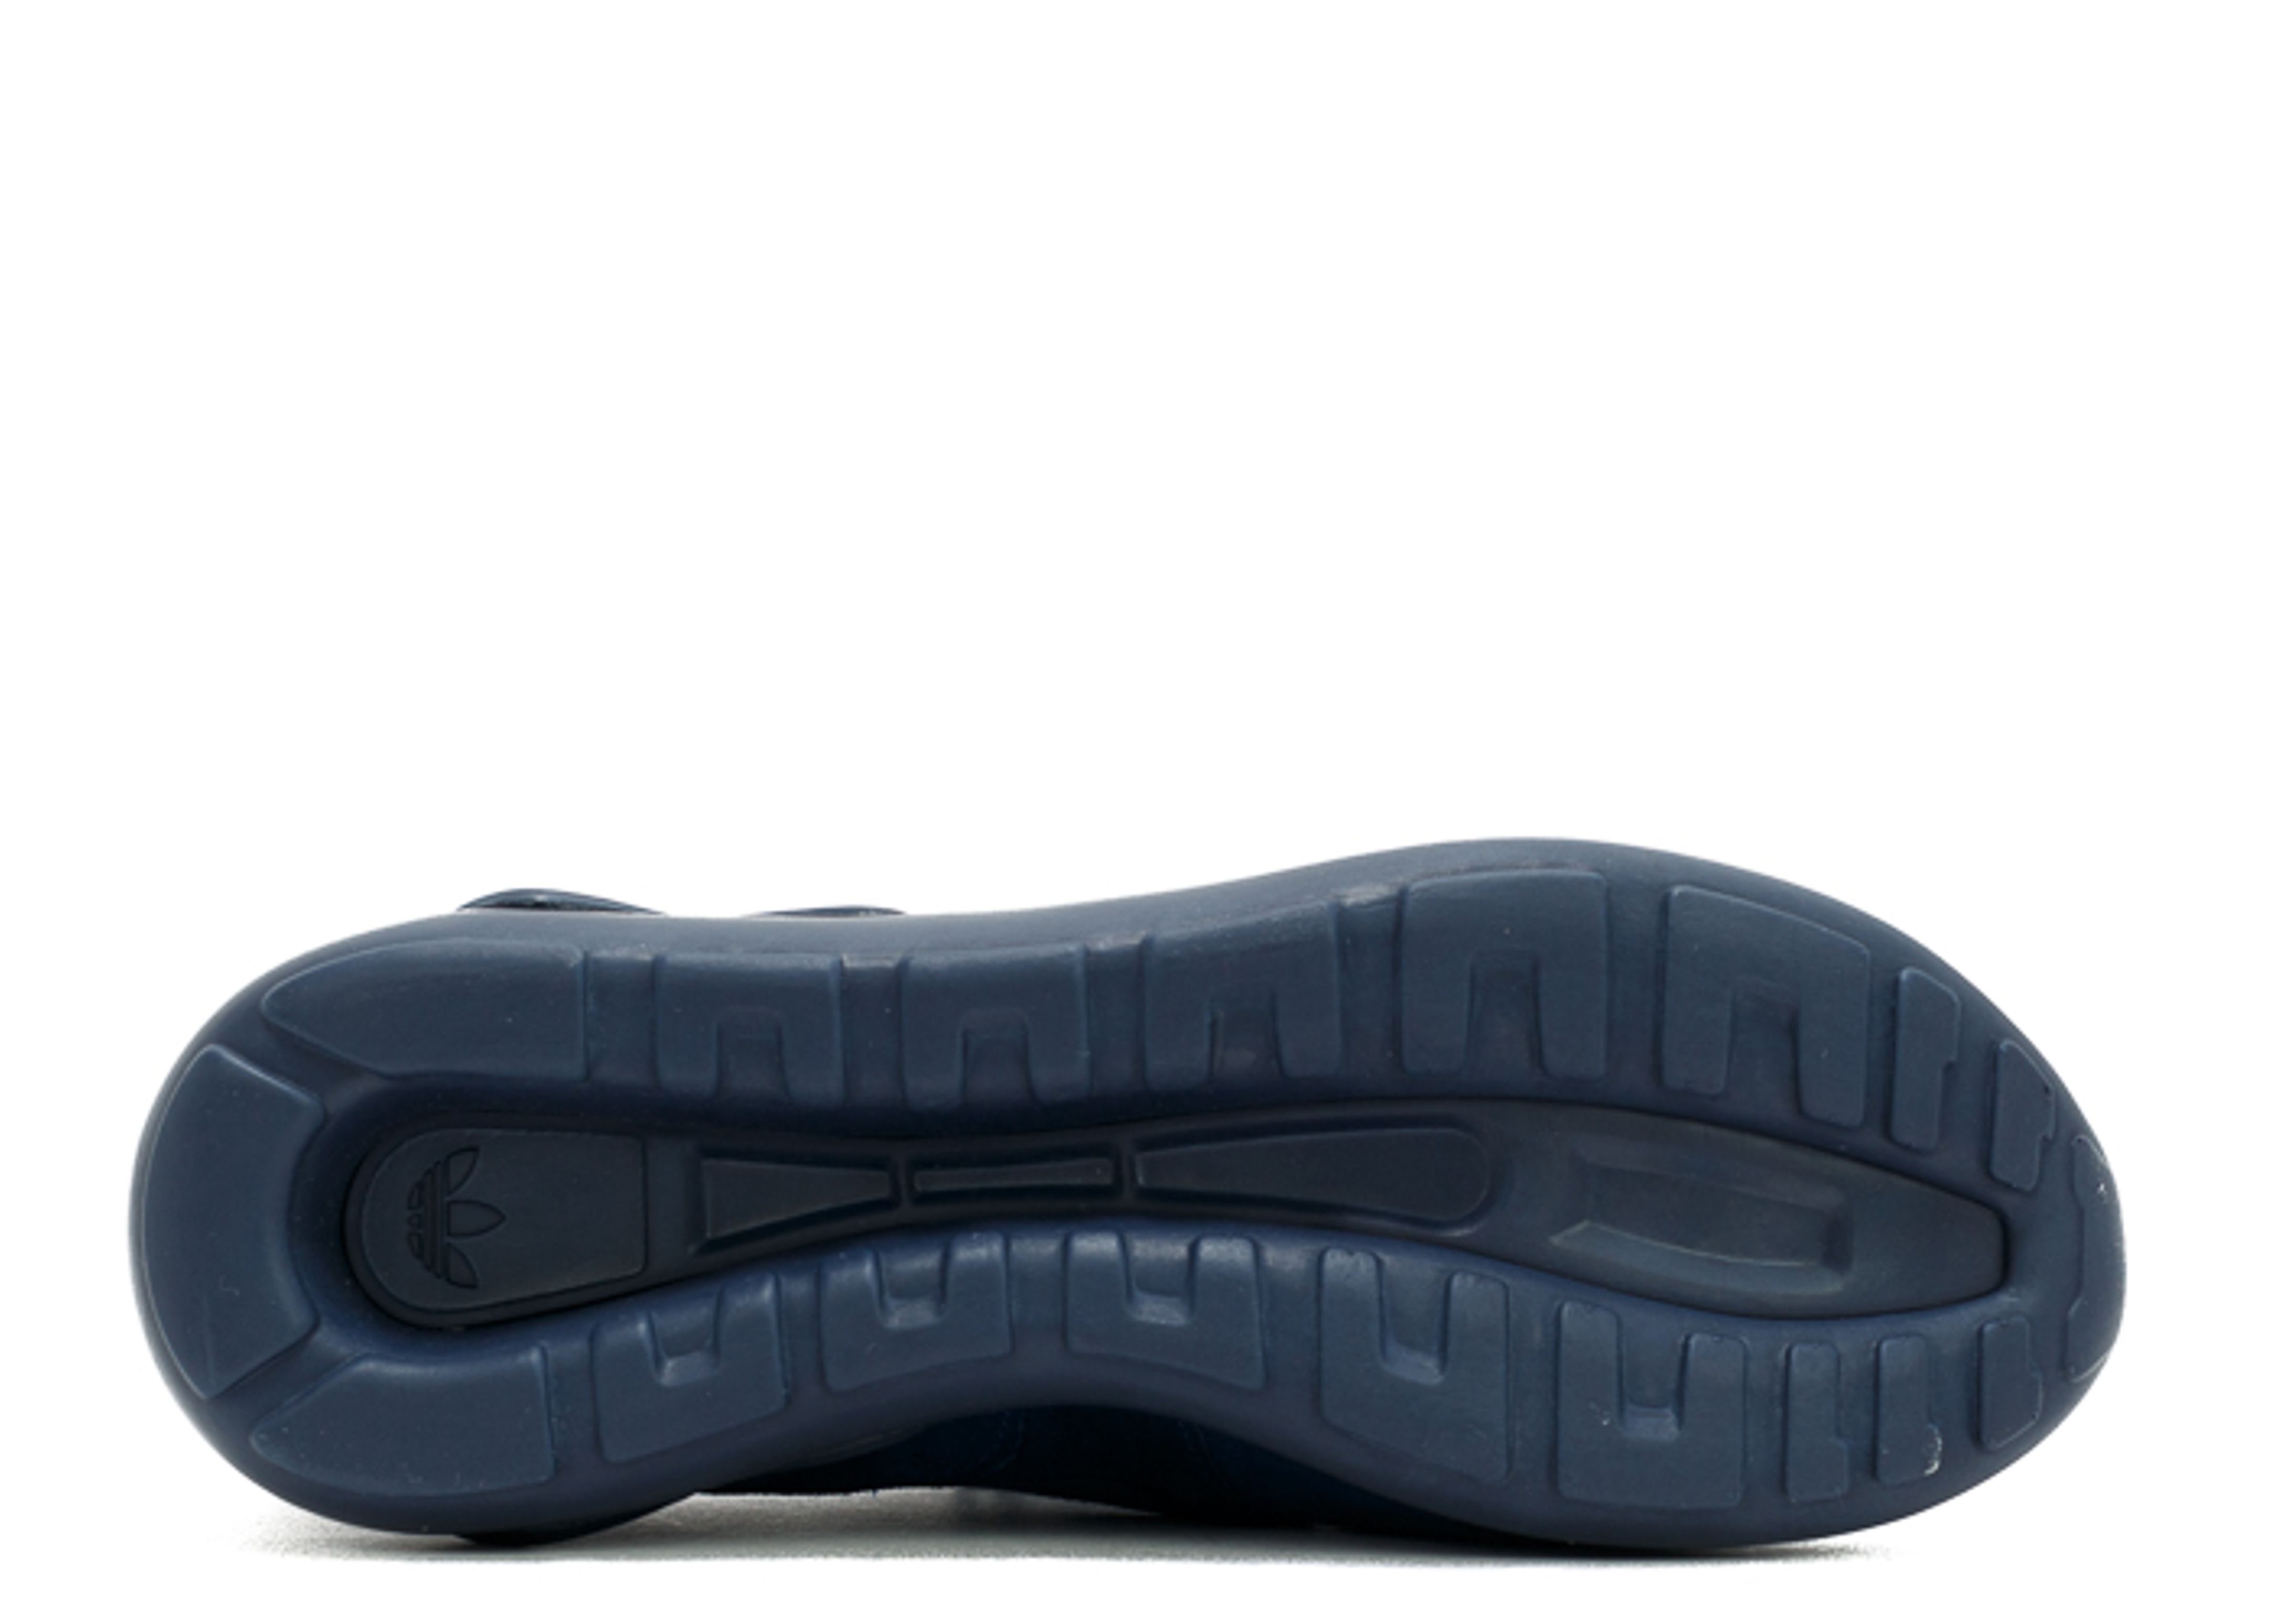 SneakersBR Unboxing: adidas Tubular Nova